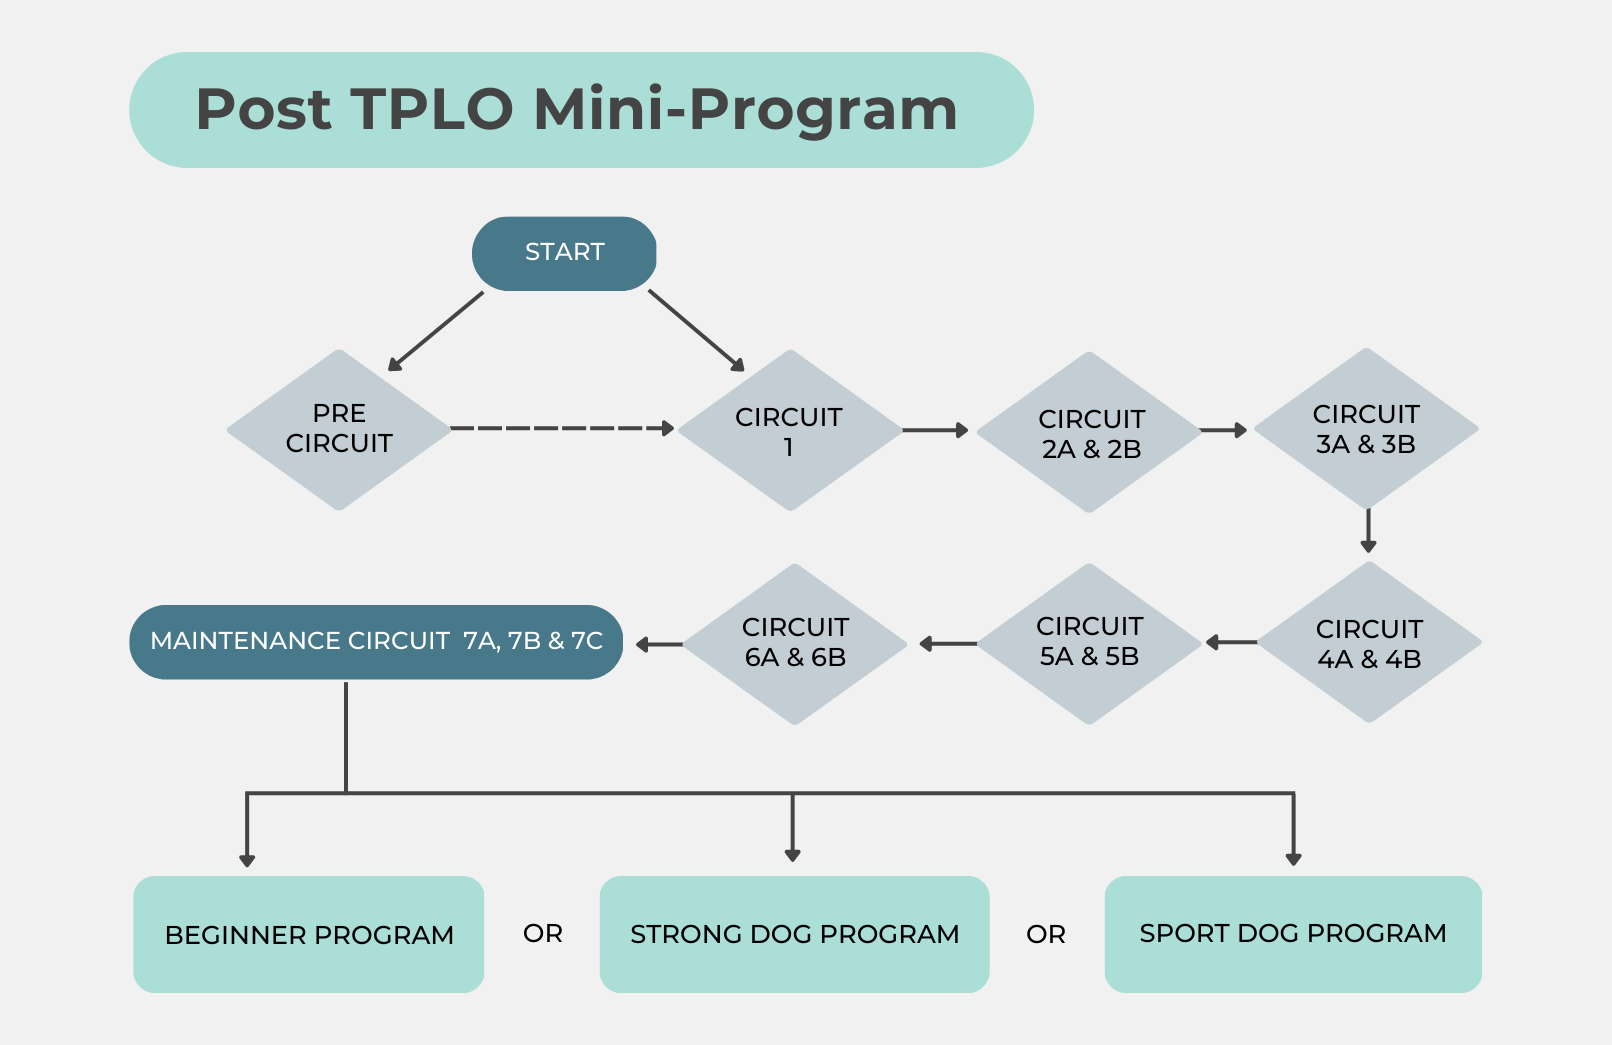 Map showing the circuit progression through the Post TPLO Mini-Program